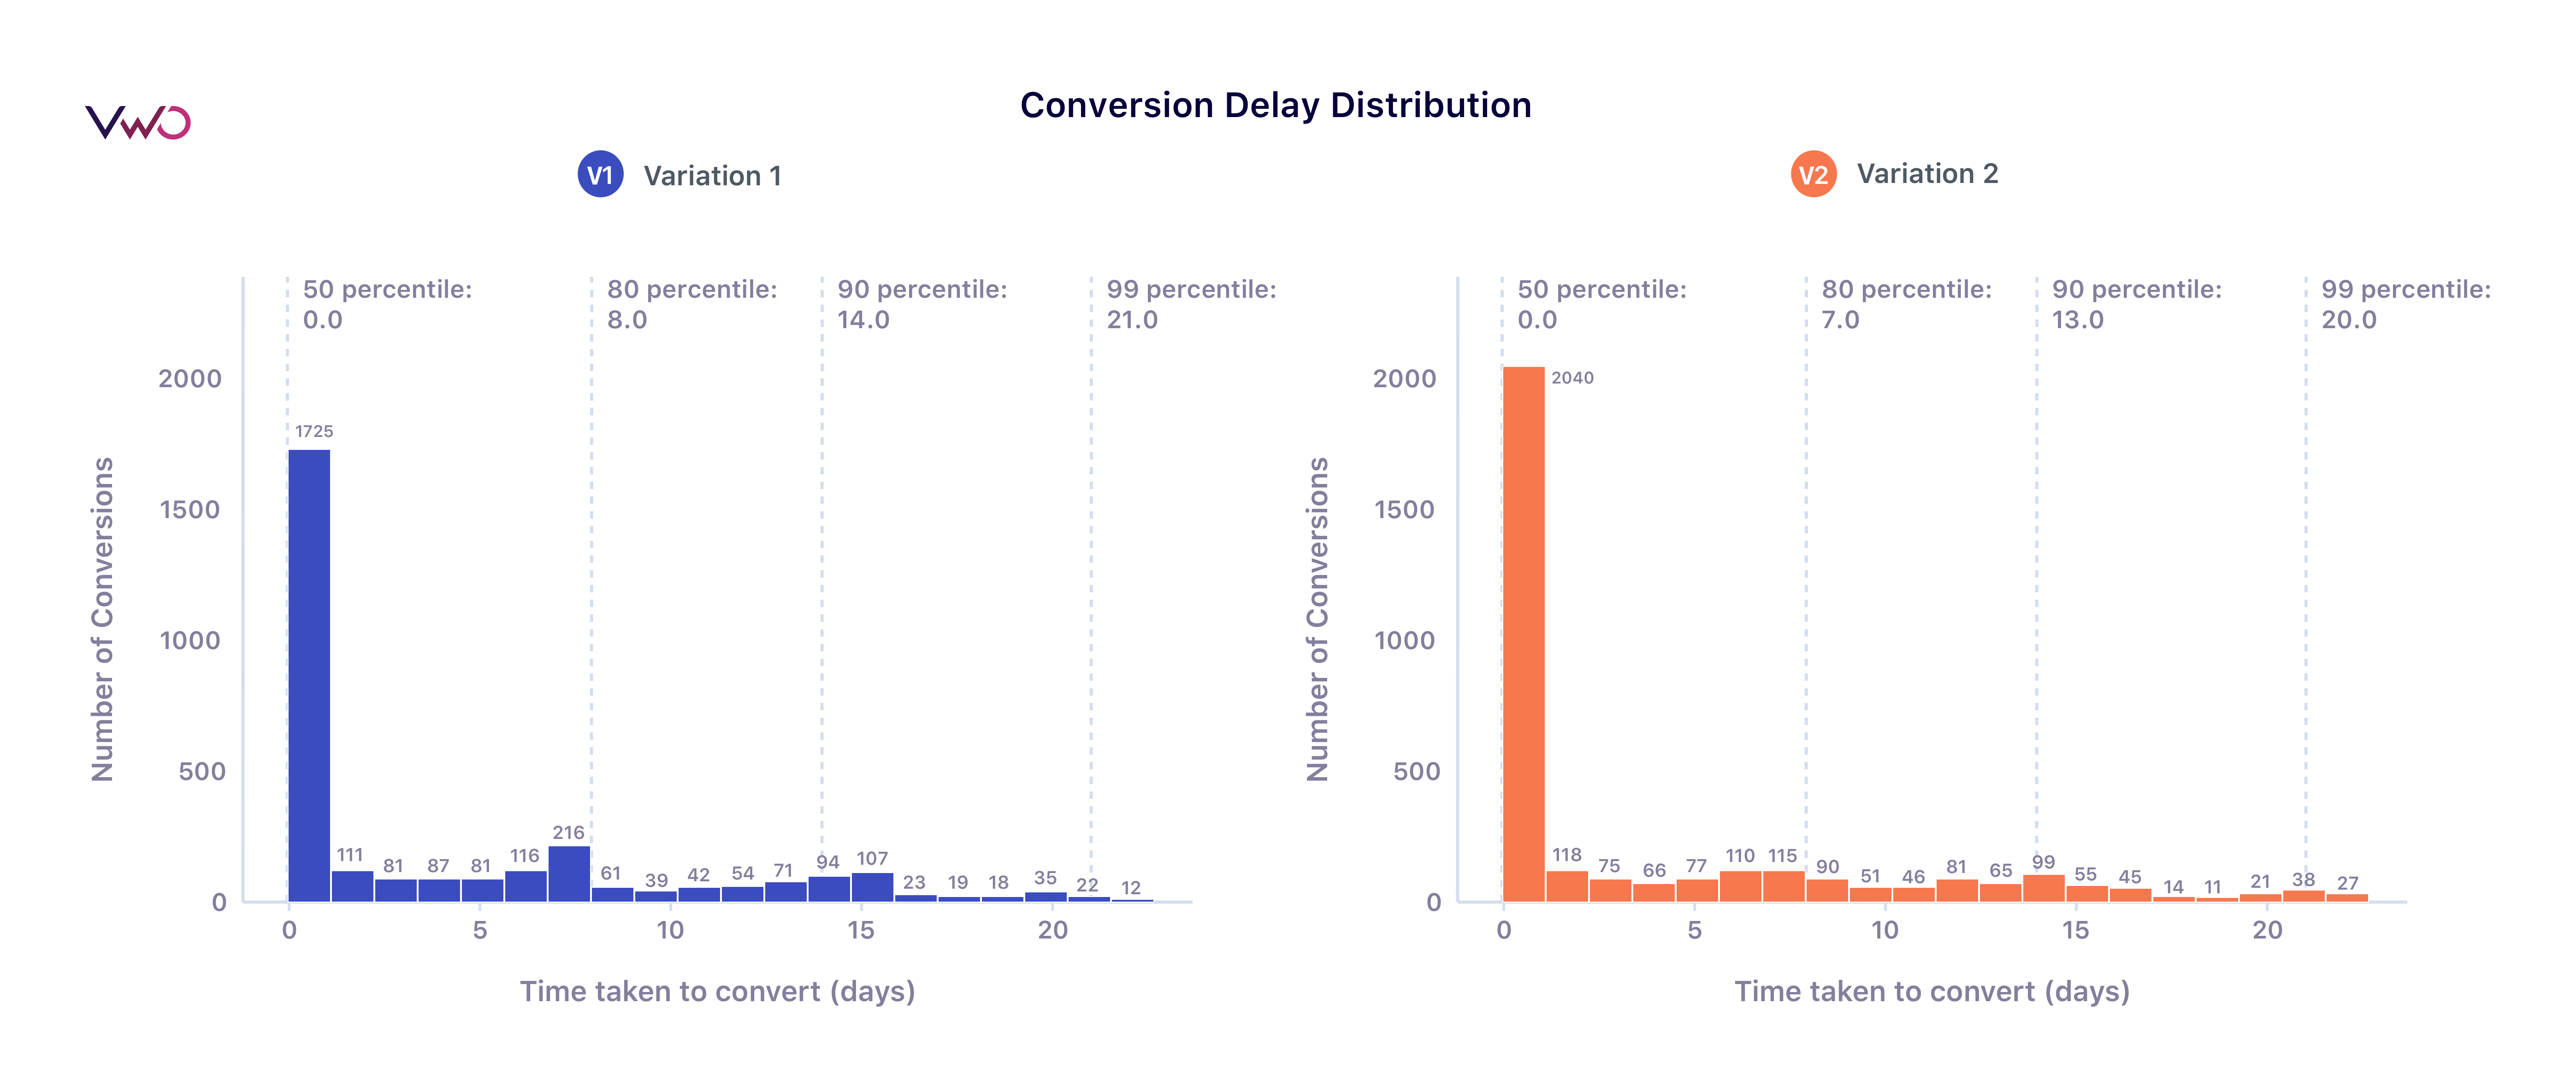 Conversion delay distribution graphs